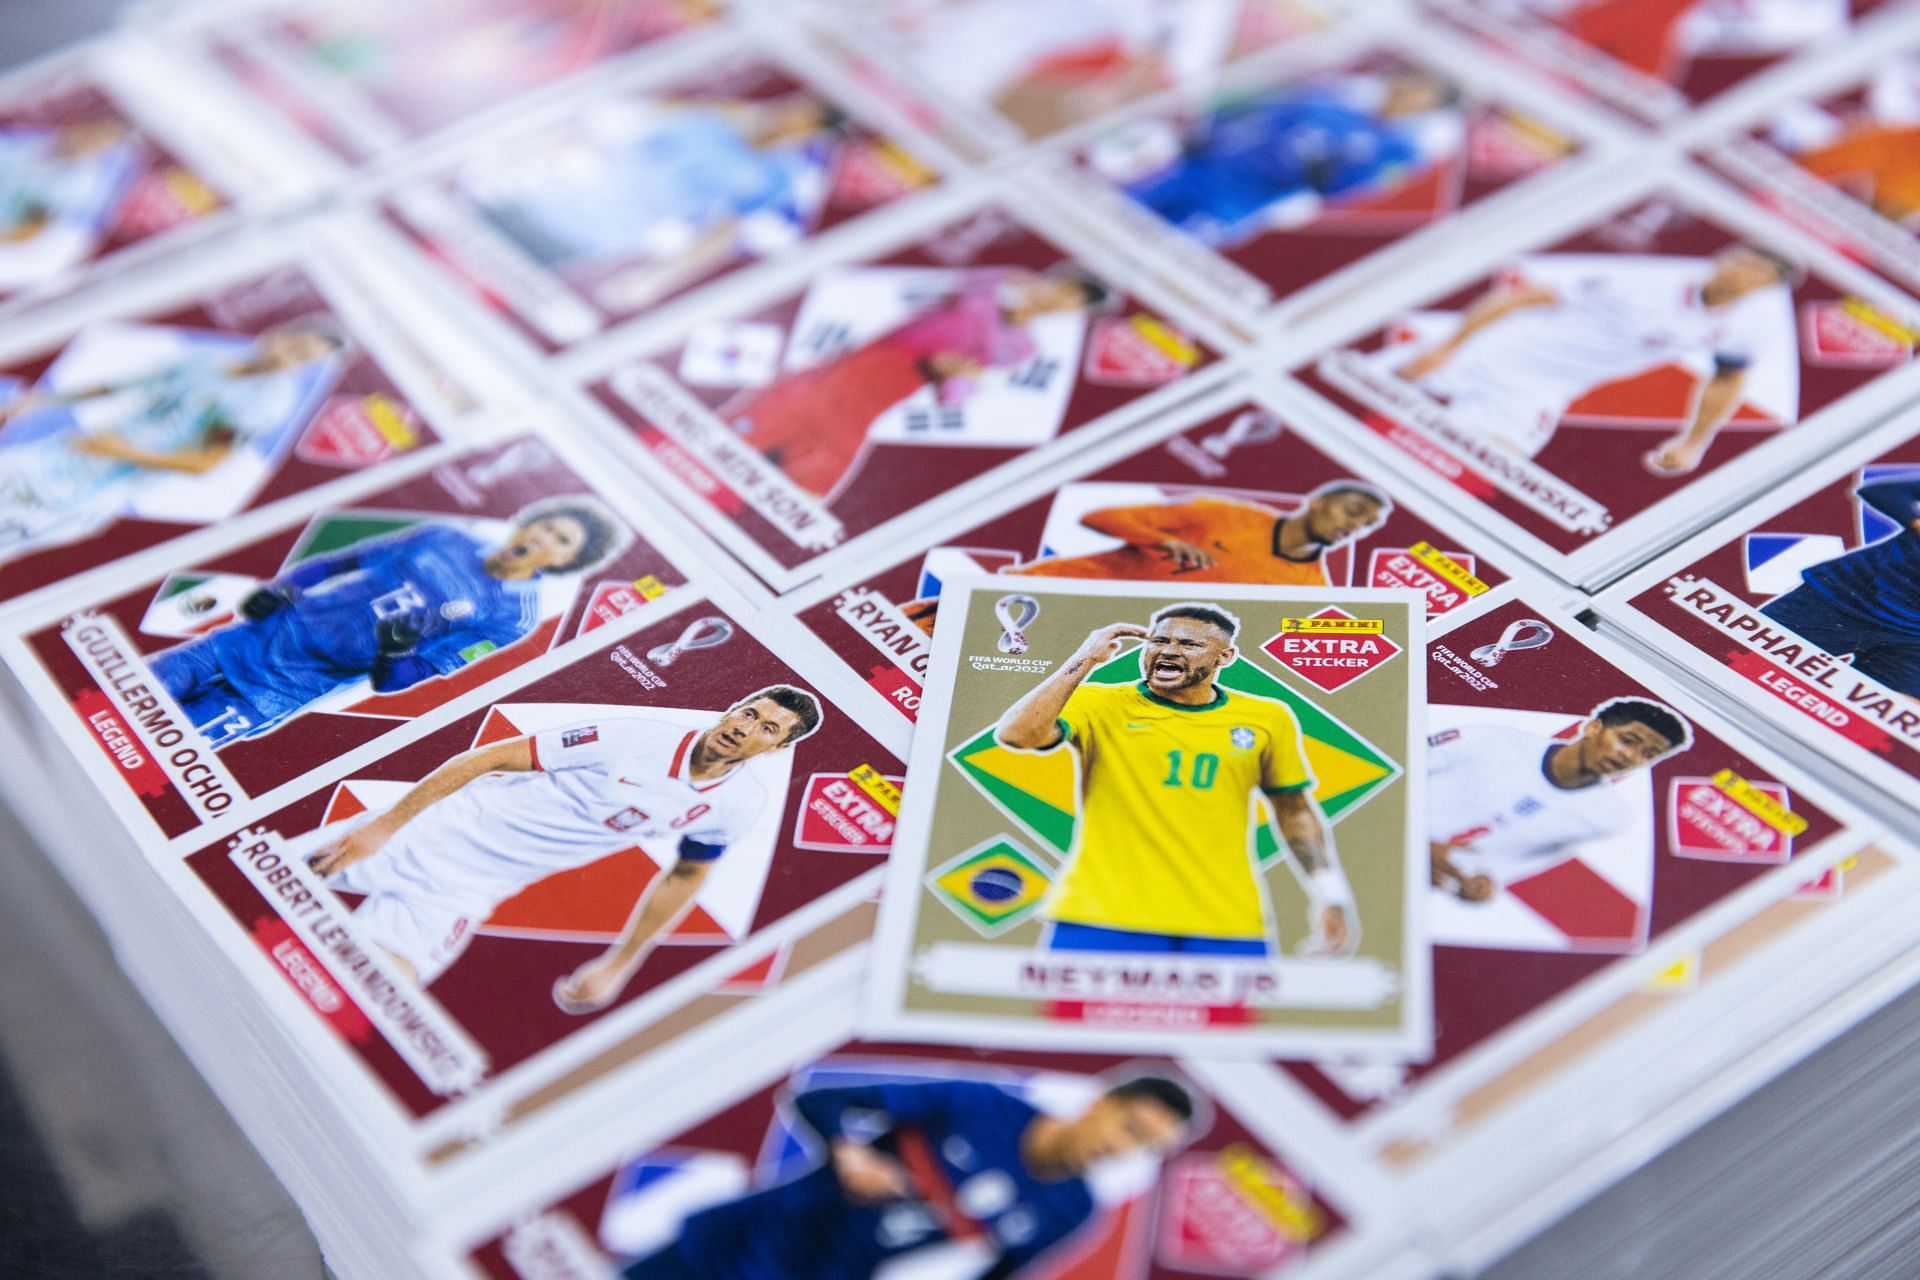 Panini Hub in Sao Paulo Distributes Football Sticker Amid World Cup Fever: PSG superstar Neymar